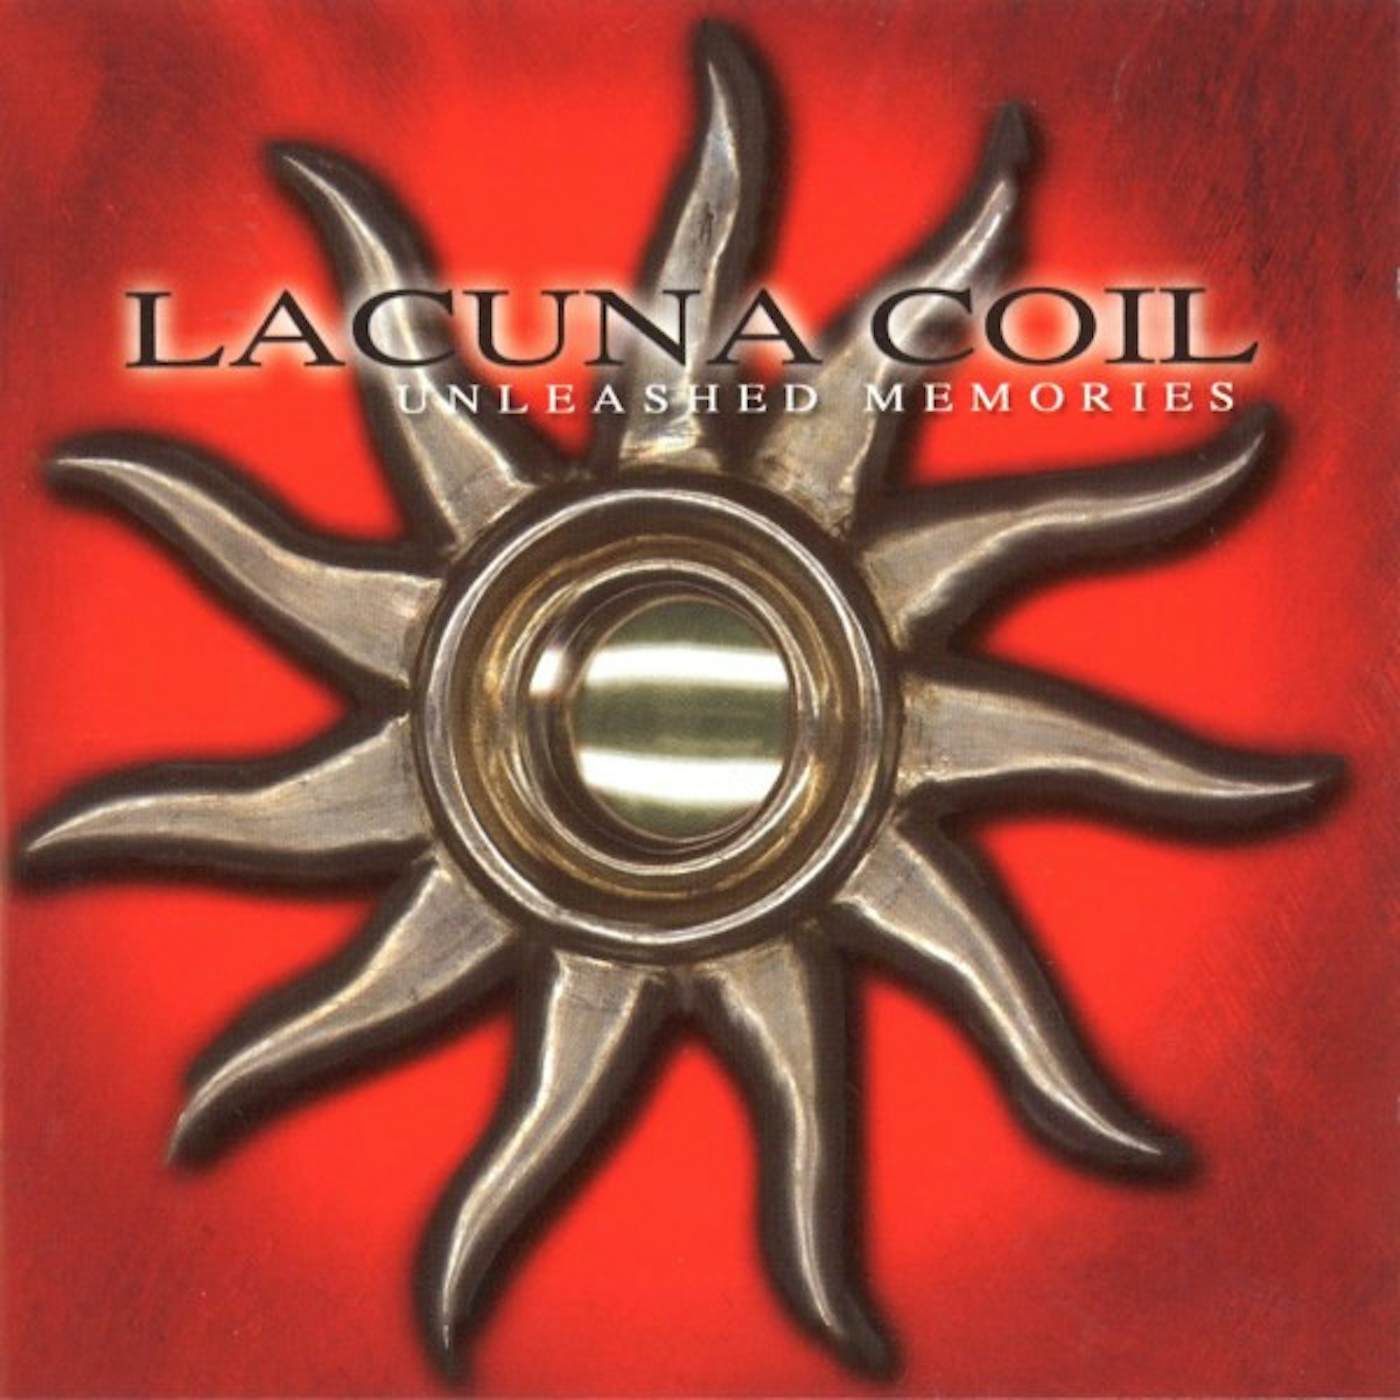 Lacuna Coil Unleashed Memories Vinyl Record